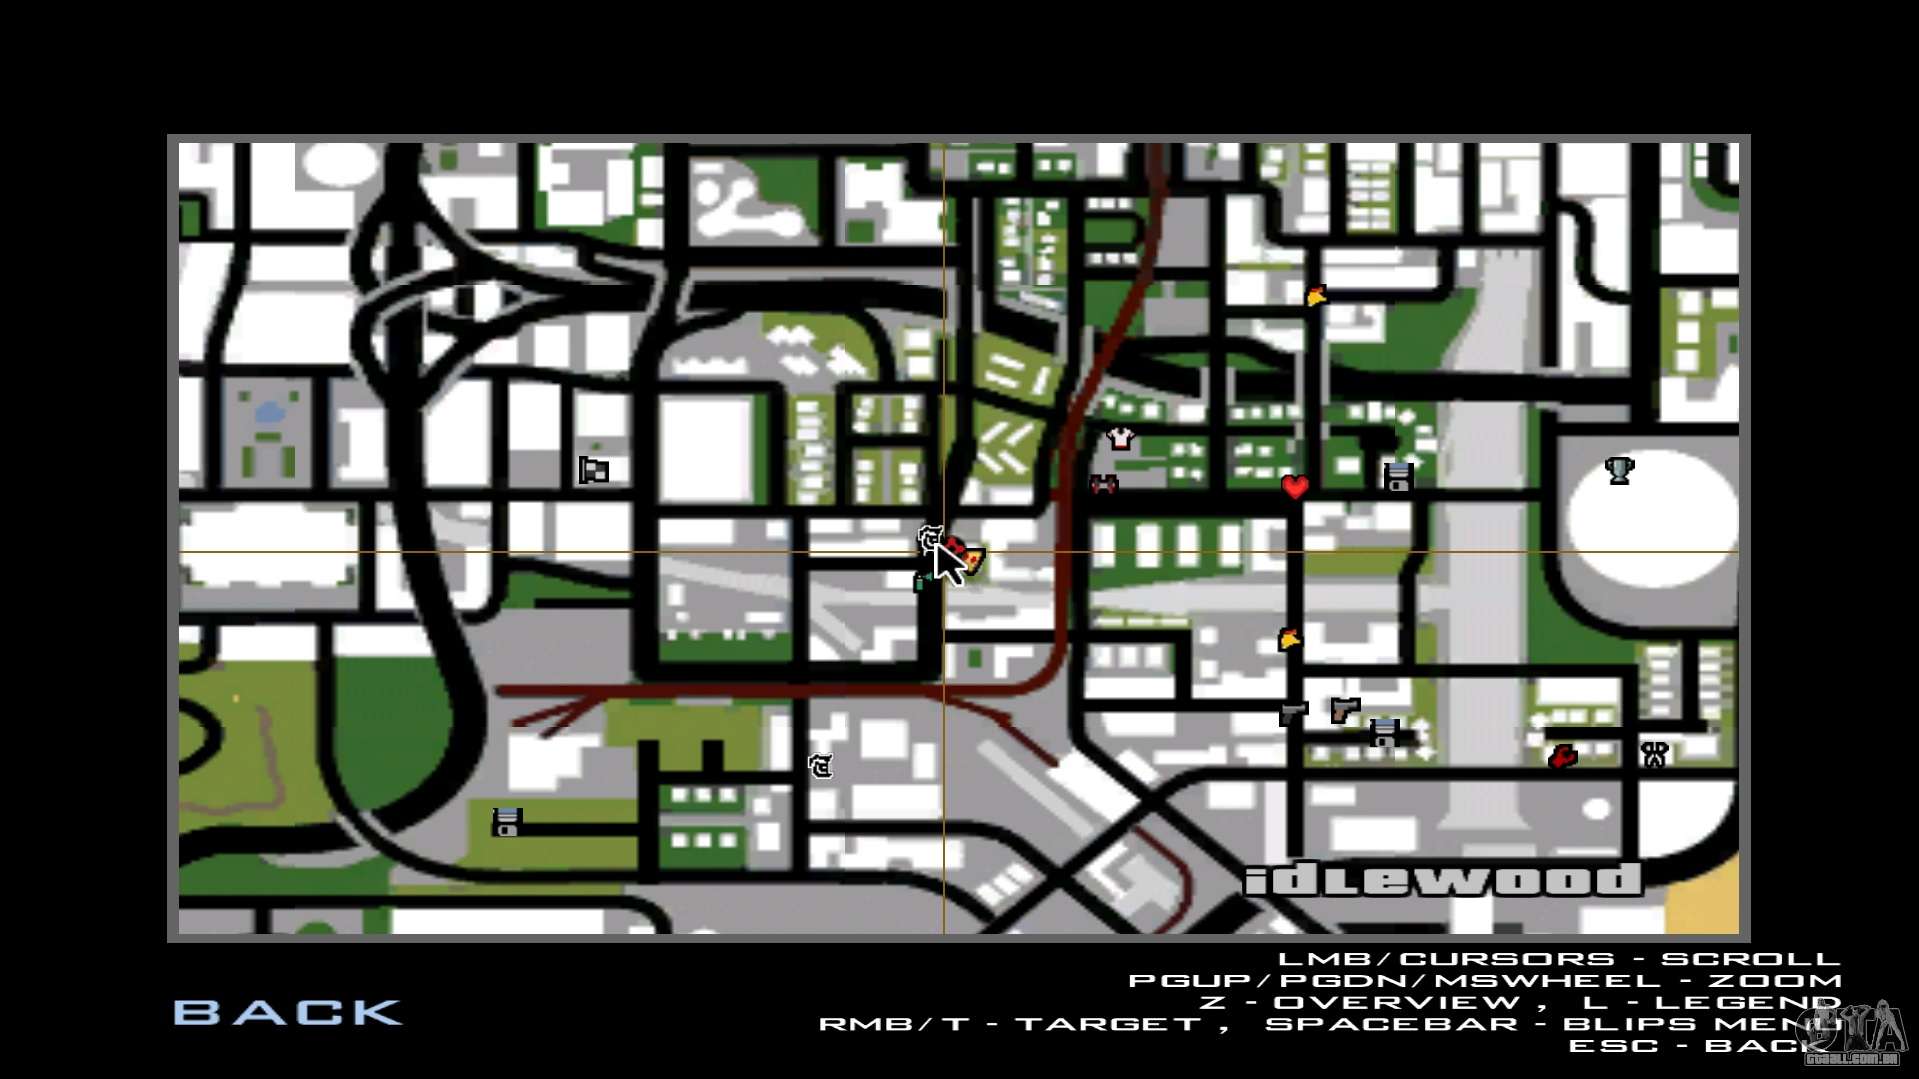 GTA San Andreas: barbearia faz comercial inspirado no jogo